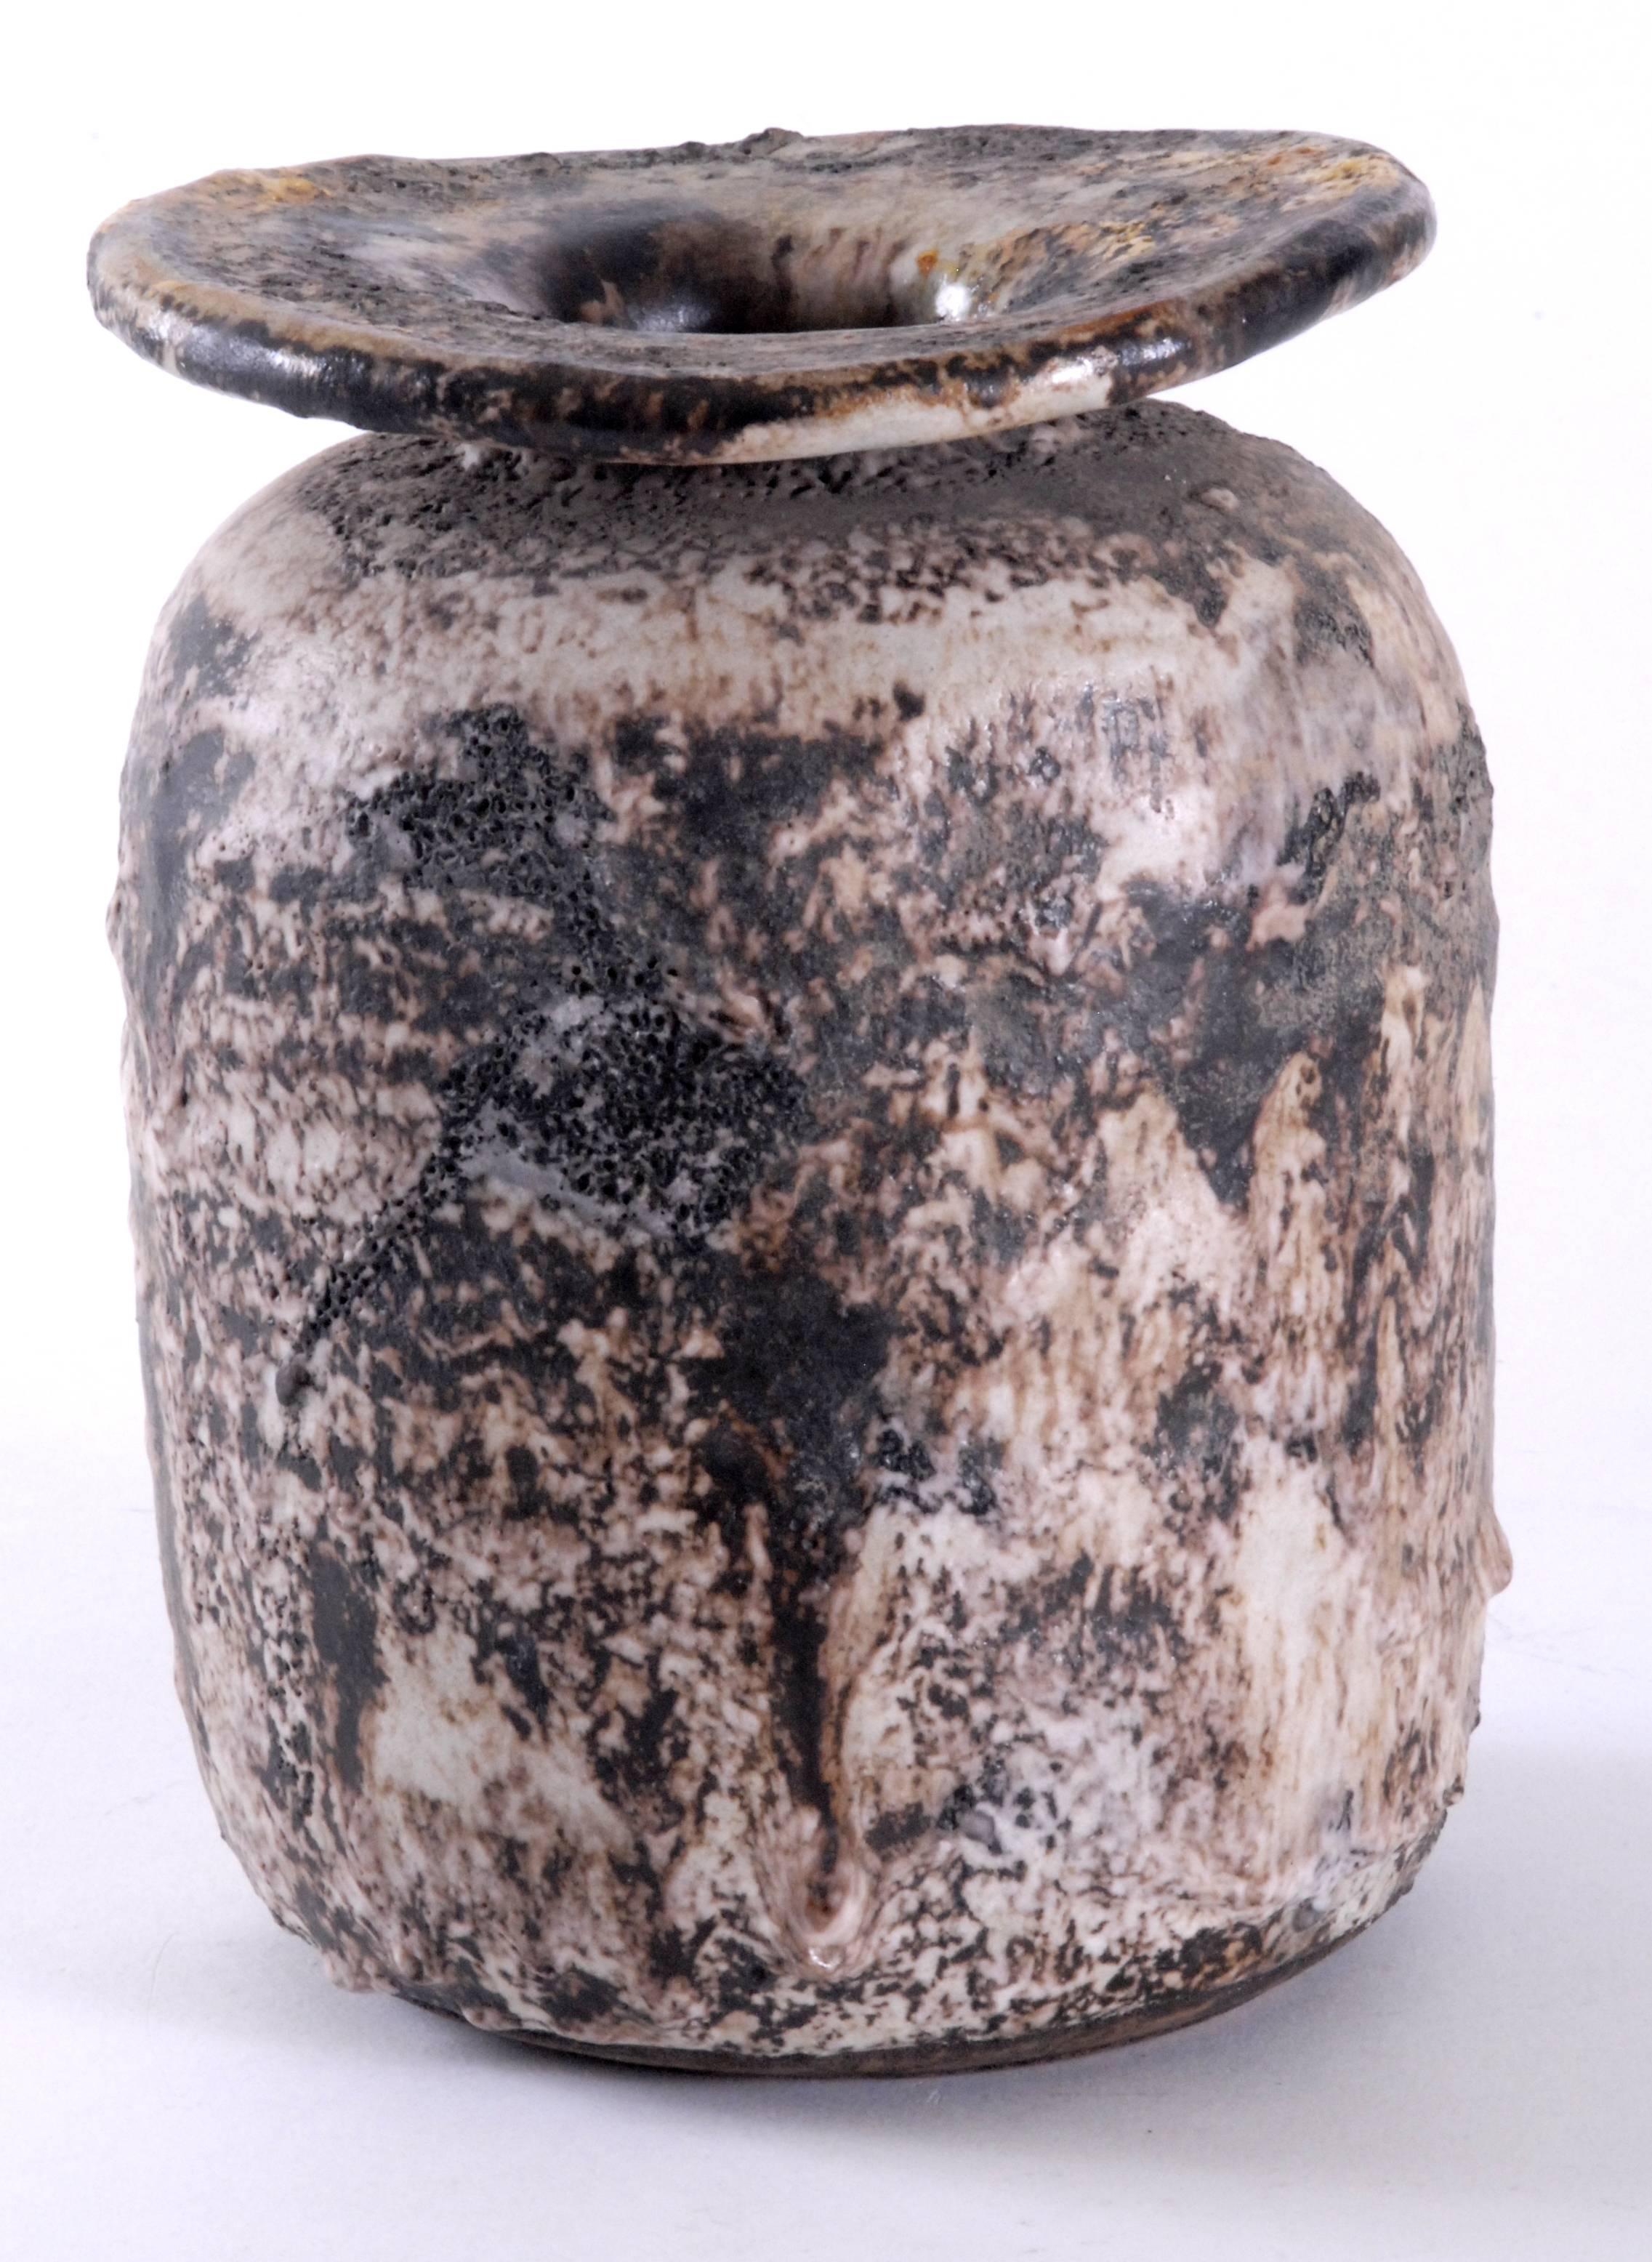 Italian Bitossi Aldo Londi Free-Form Vase, Italy, circa 1955